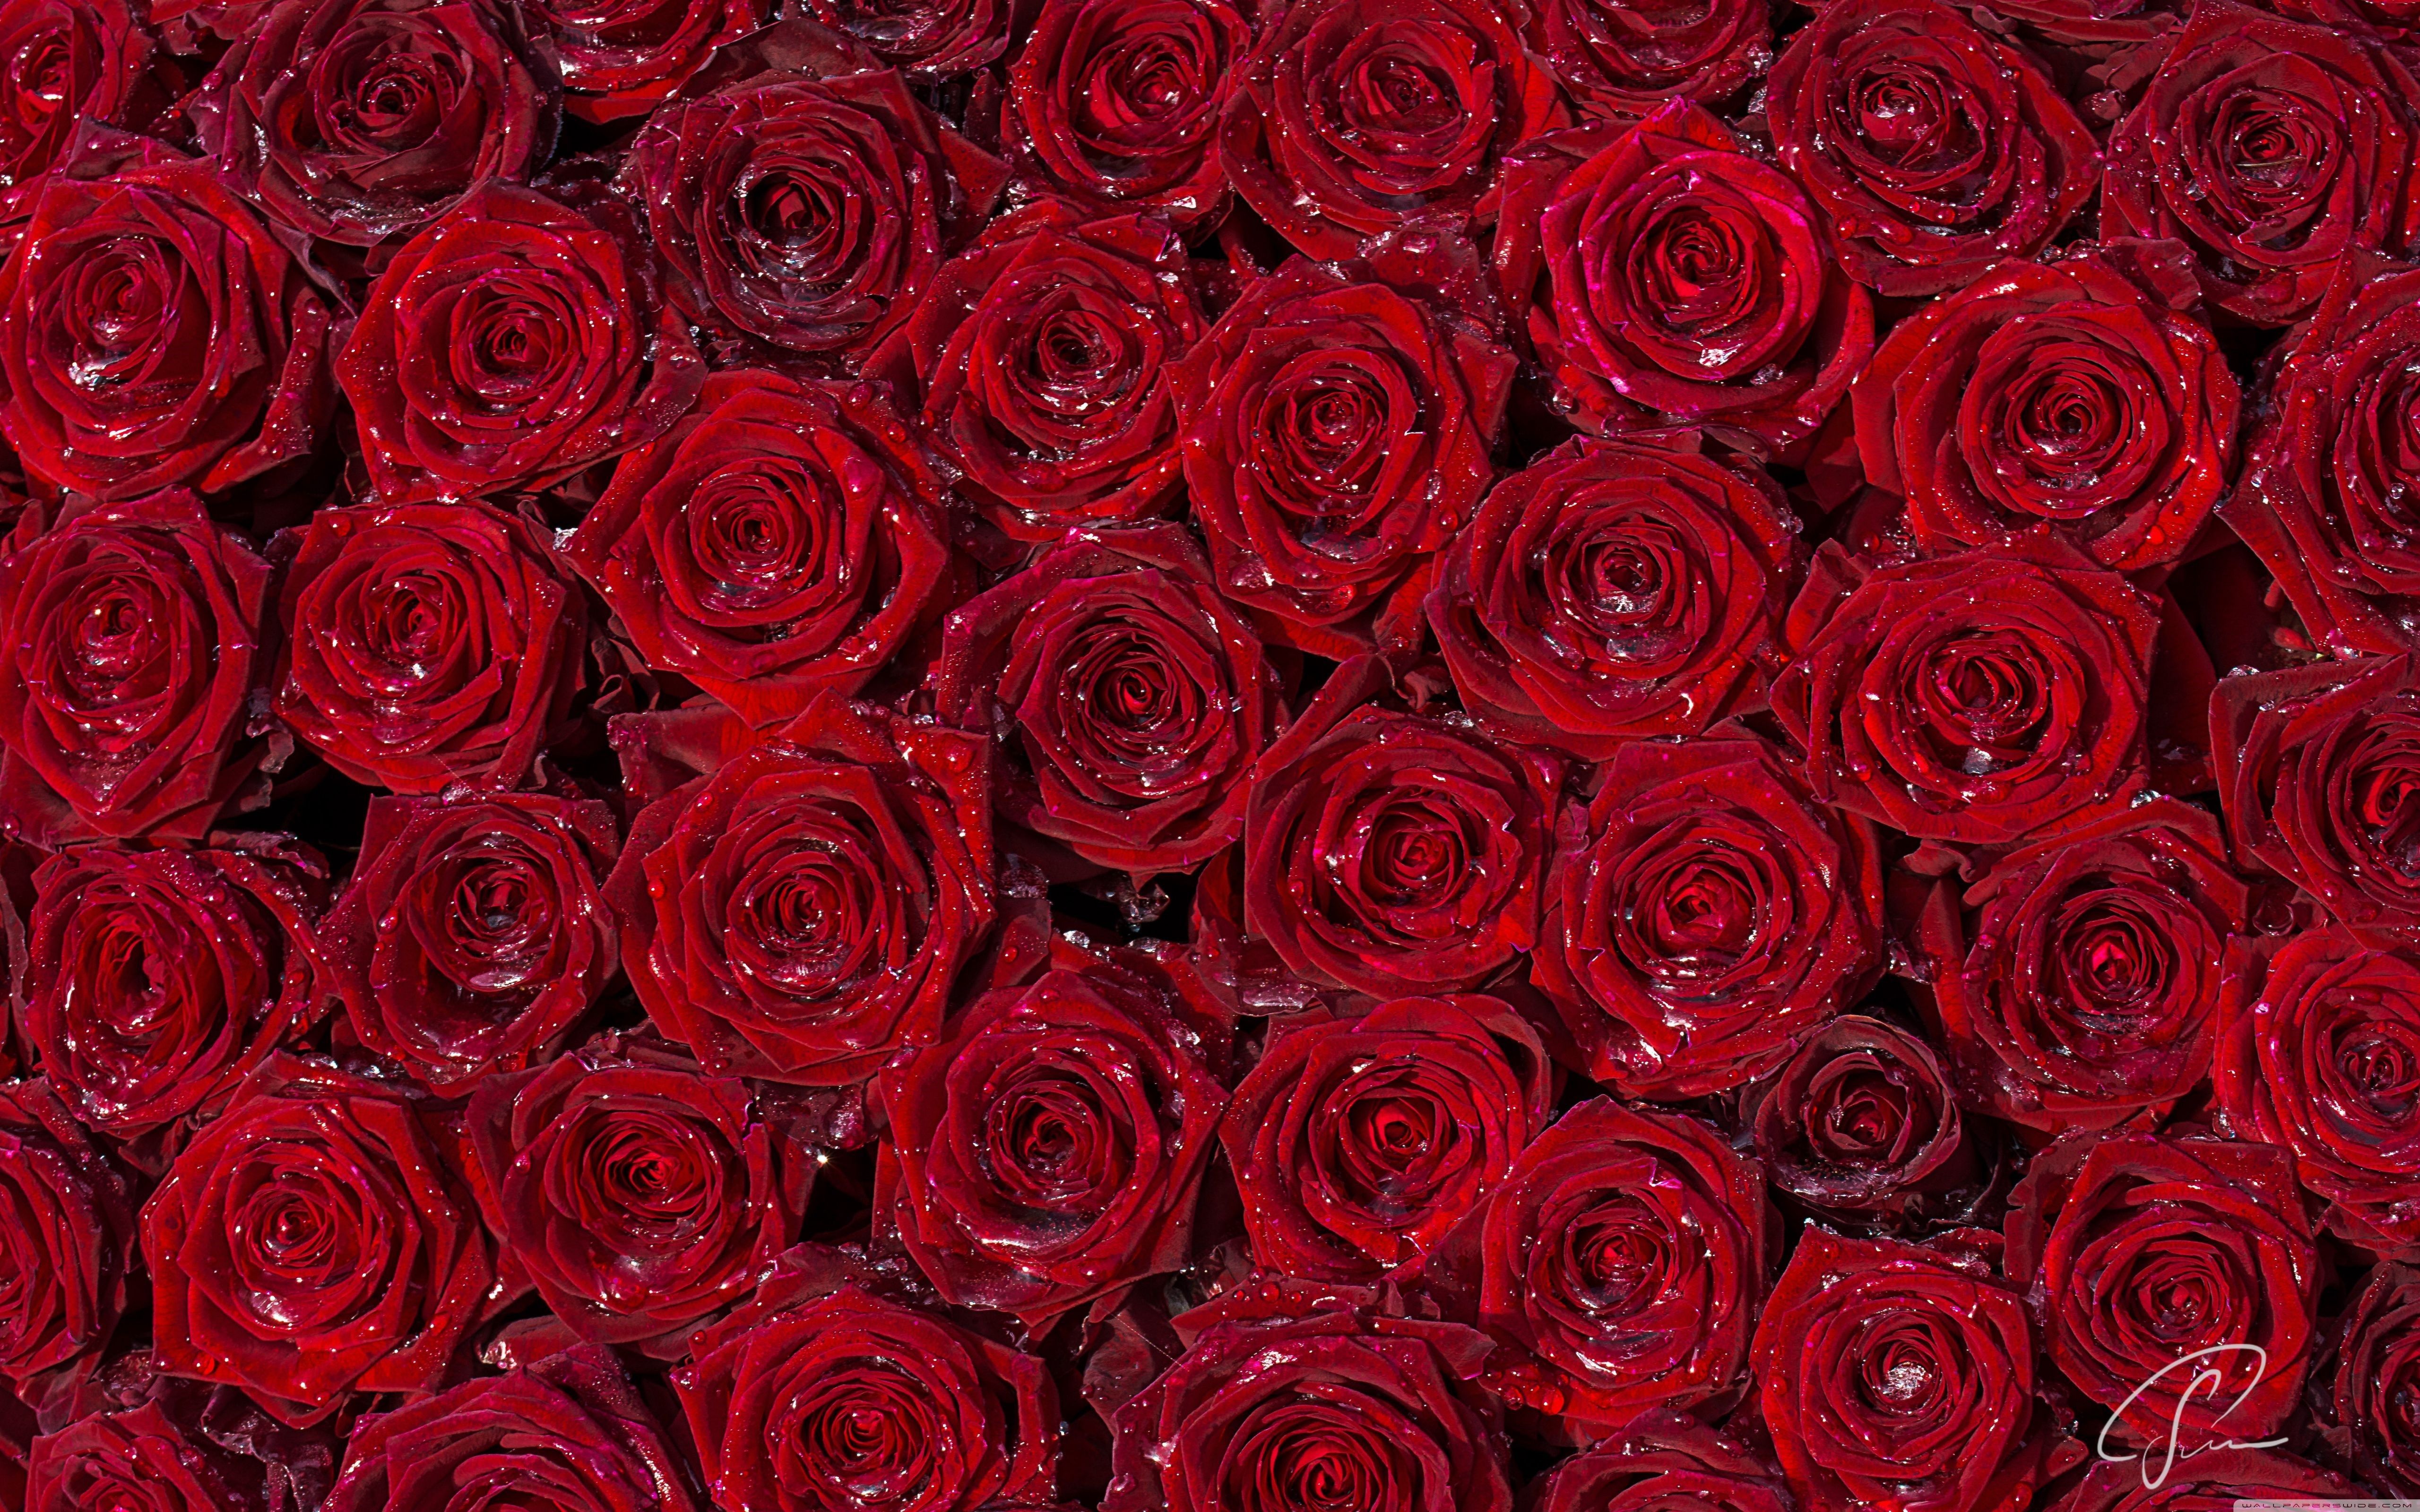 Top 999+ Black Rose Iphone Wallpaper Full HD, 4K✓Free to Use